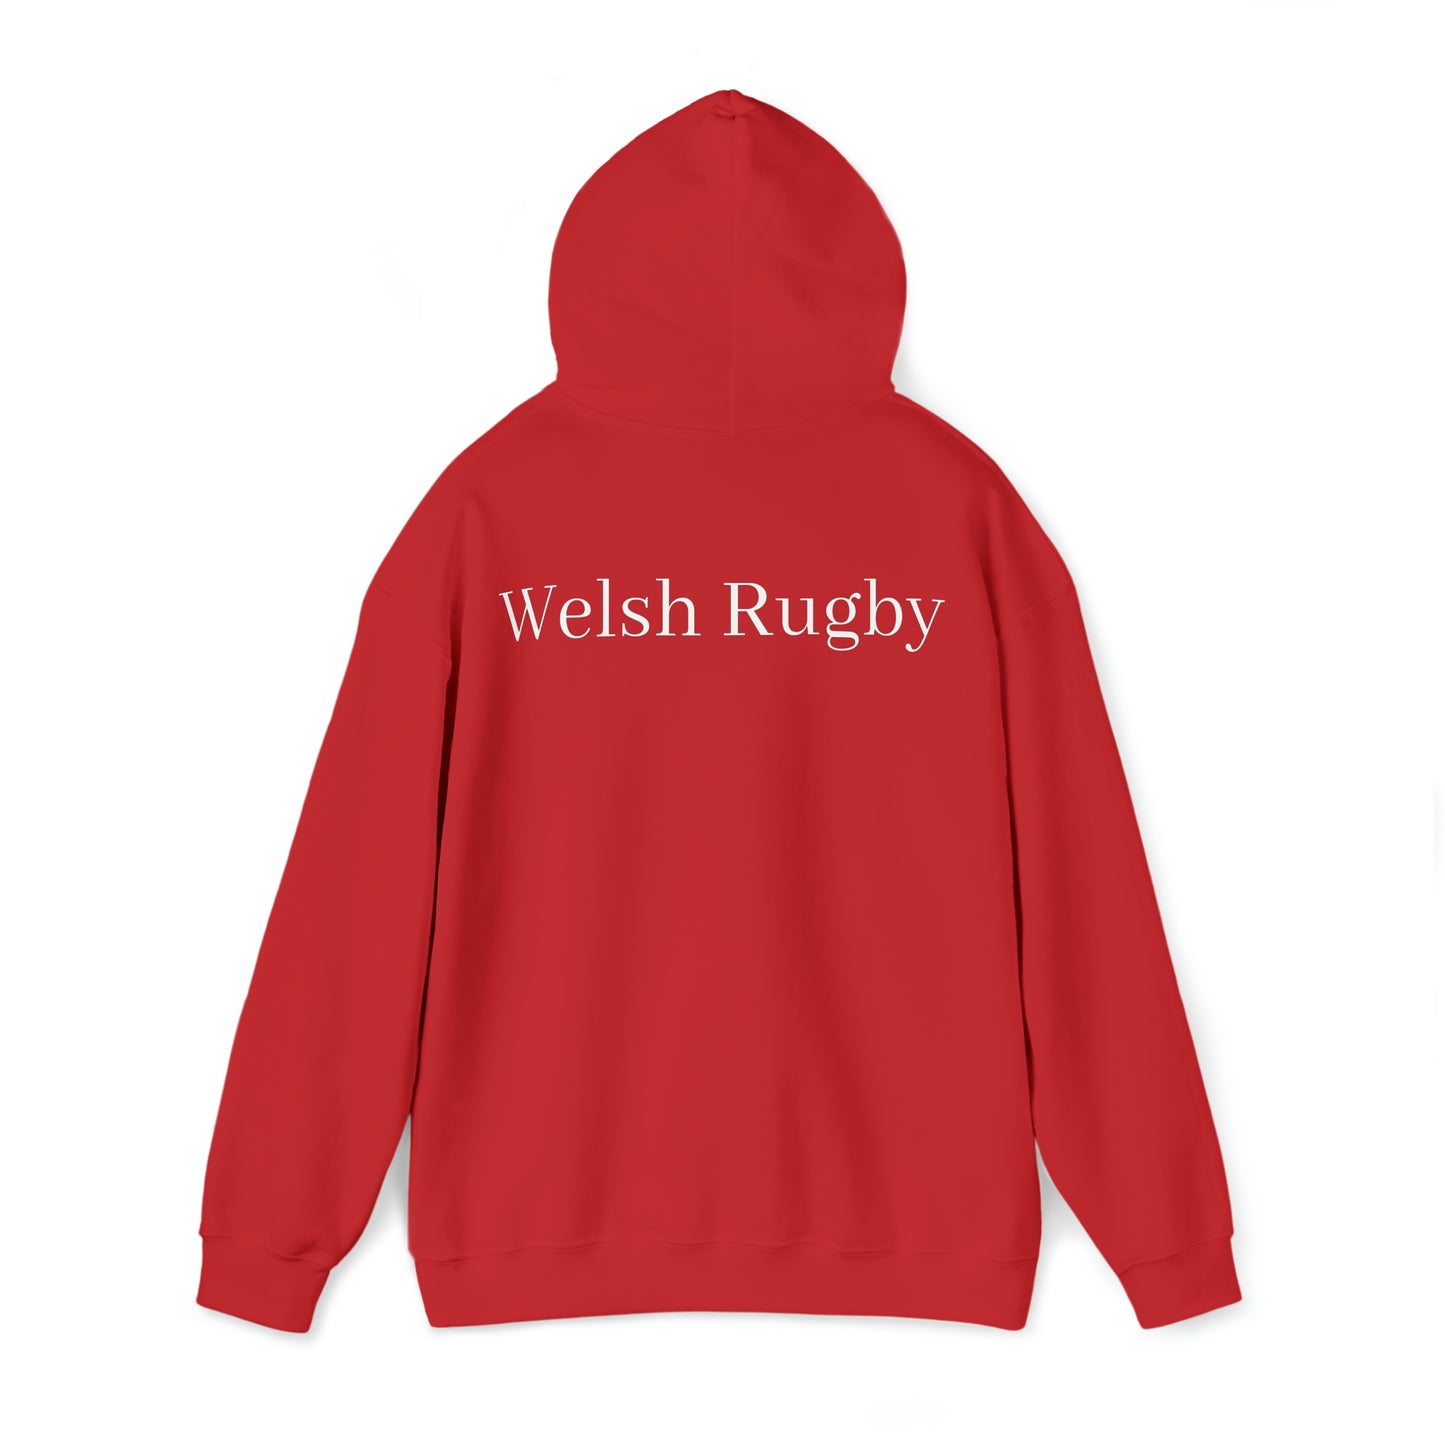 Wales RWC Photoshoot - dark hoodies